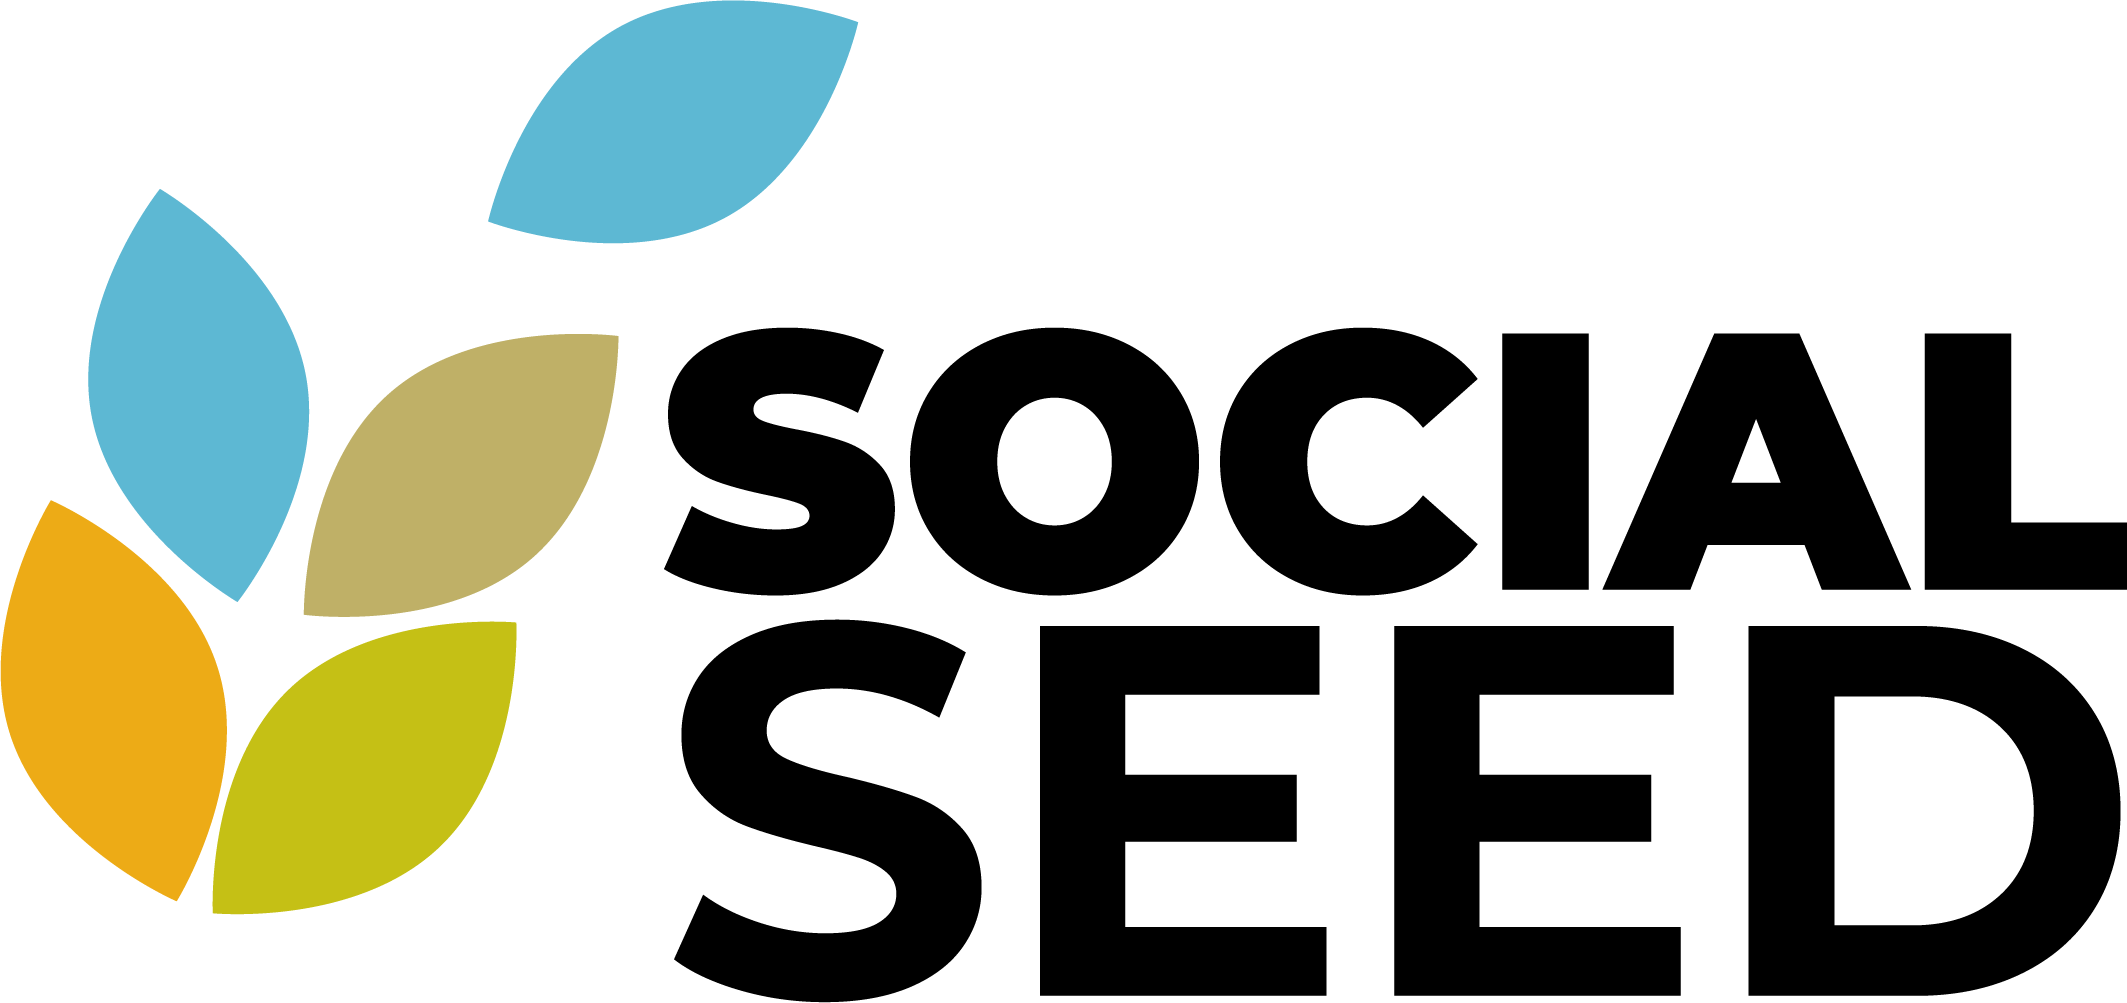 Social seed logo